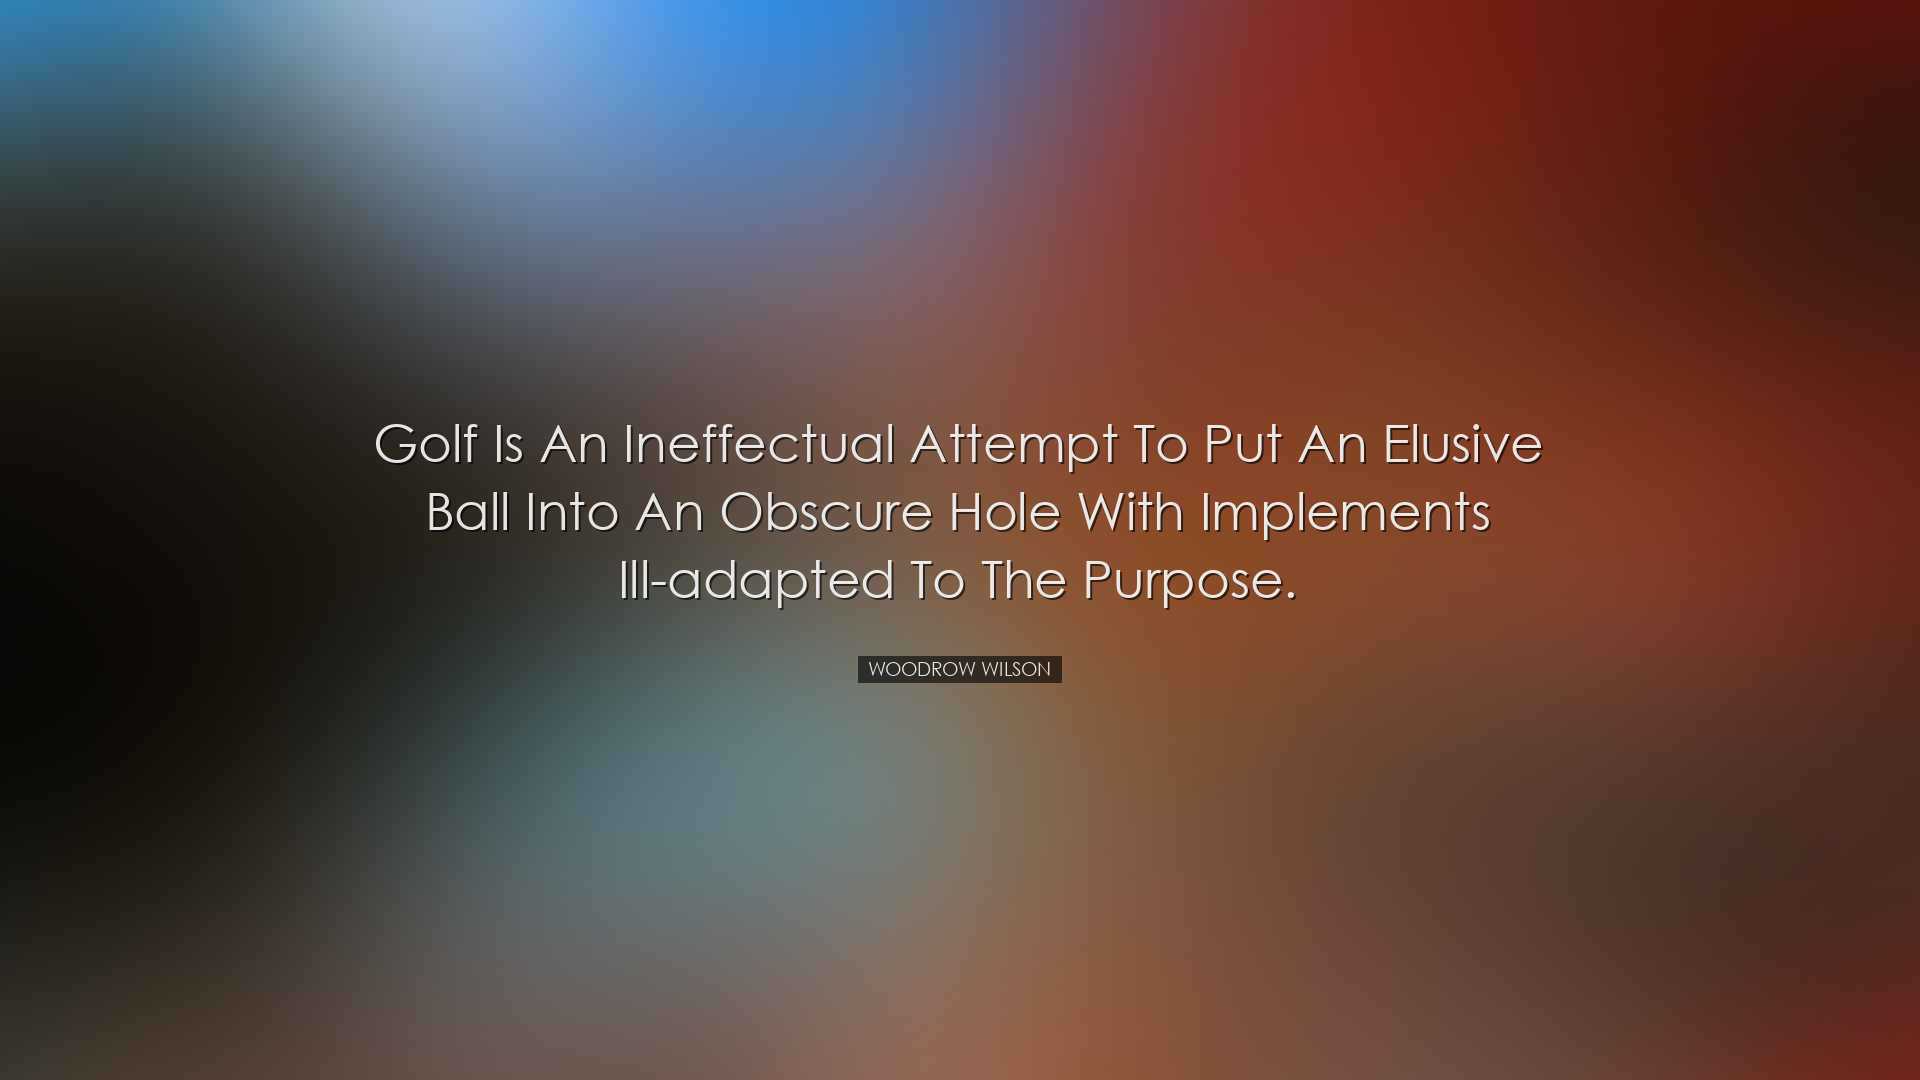 Golf is an ineffectual attempt to put an elusive ball into an obsc